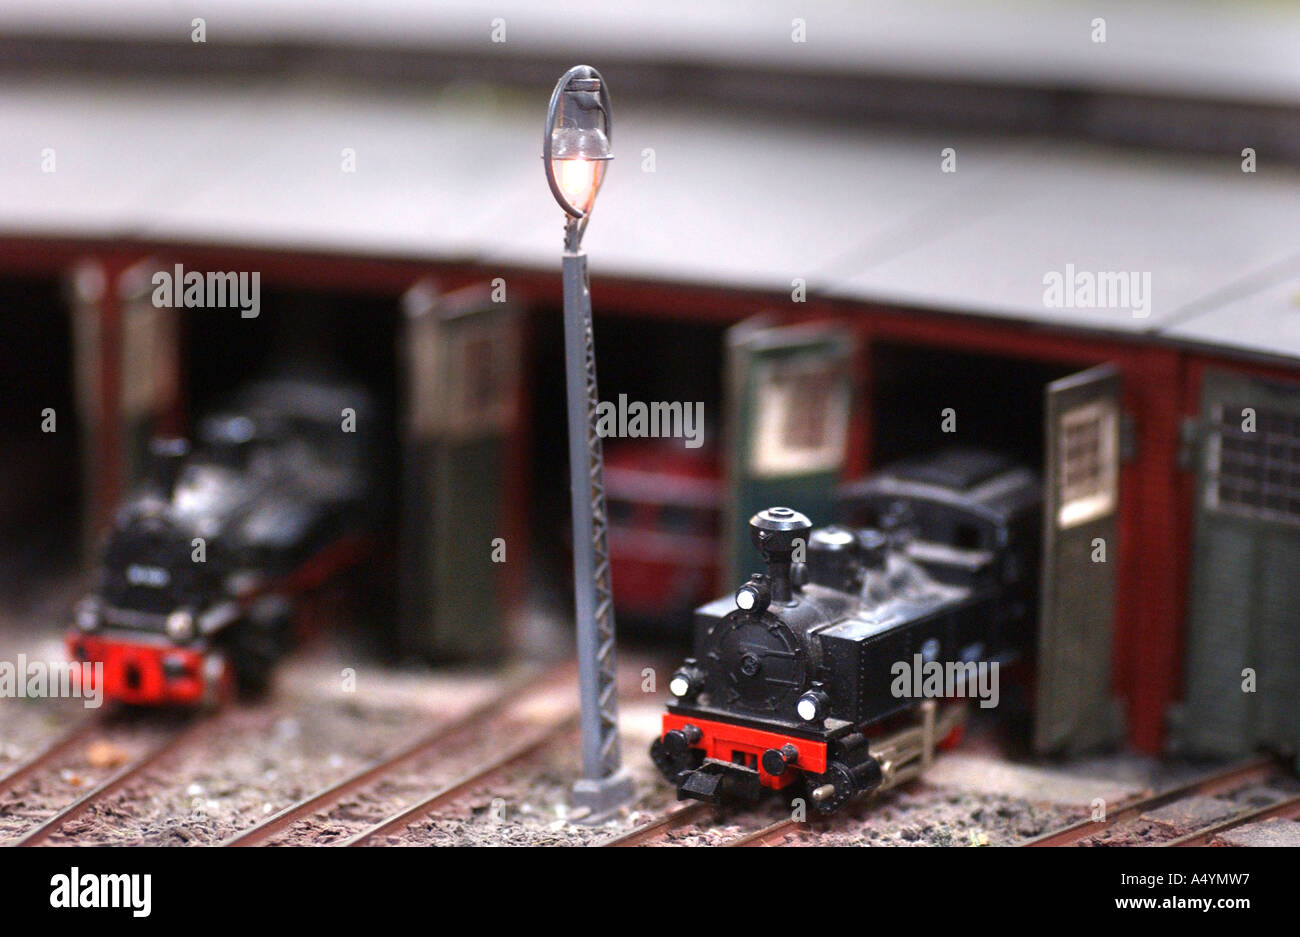 Image associée  Miniature rooms, Miniature model, Model trains